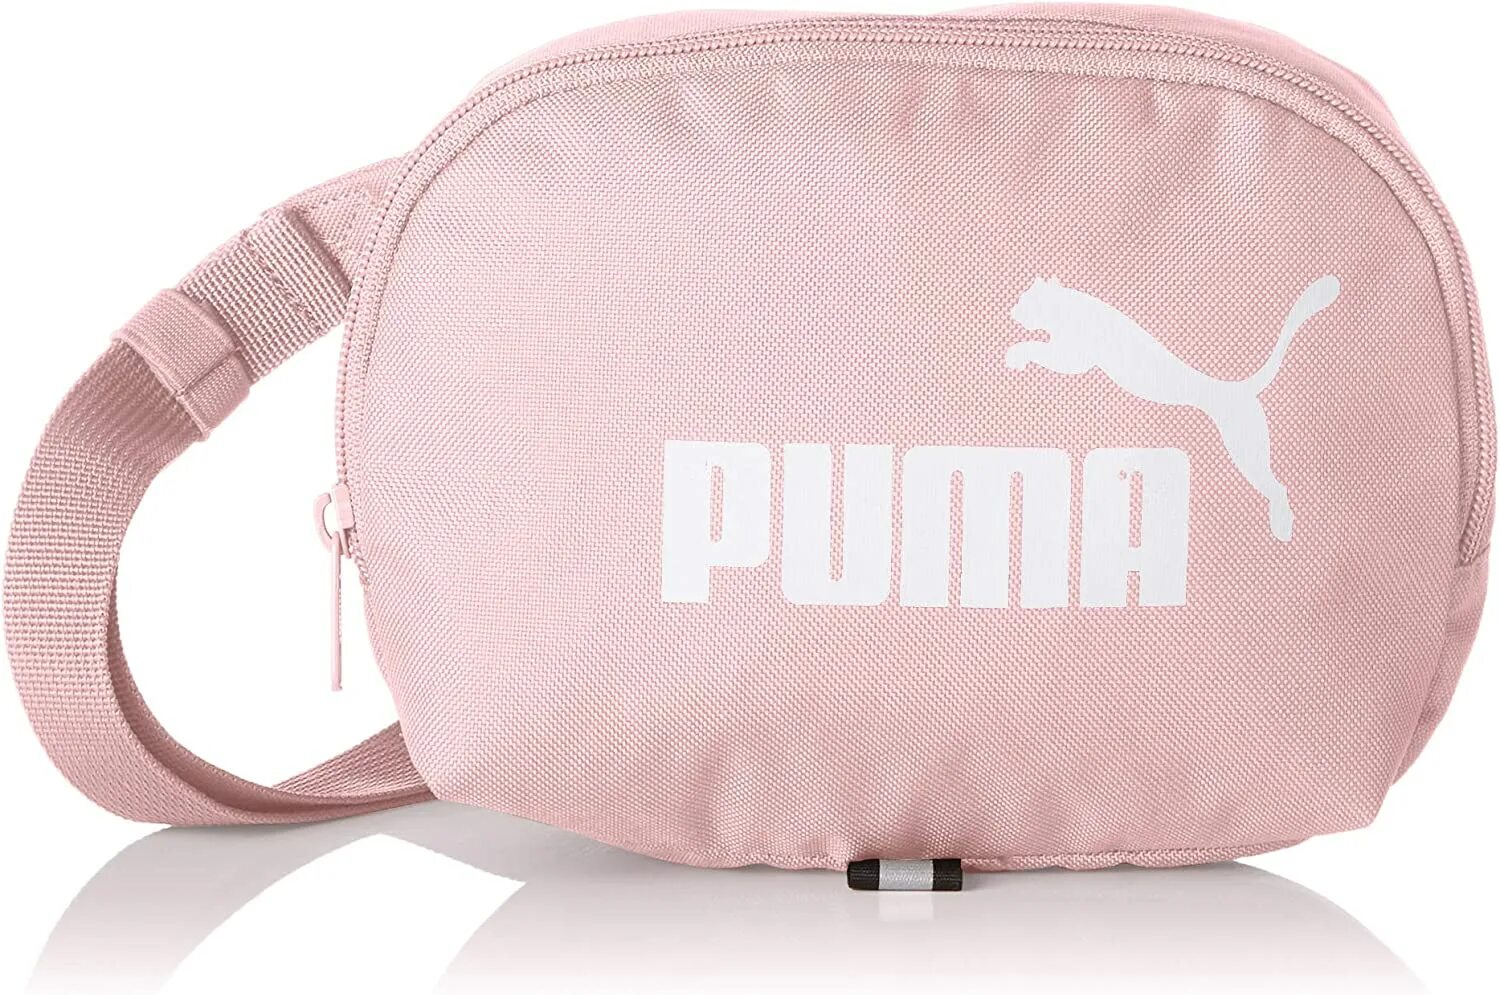 Puma / сумка на пояс Puma phase Waist Bag. Сумка Puma пудровая. Puma Pink Bag. Сумка Пума женская через плечо. Озон пума женская